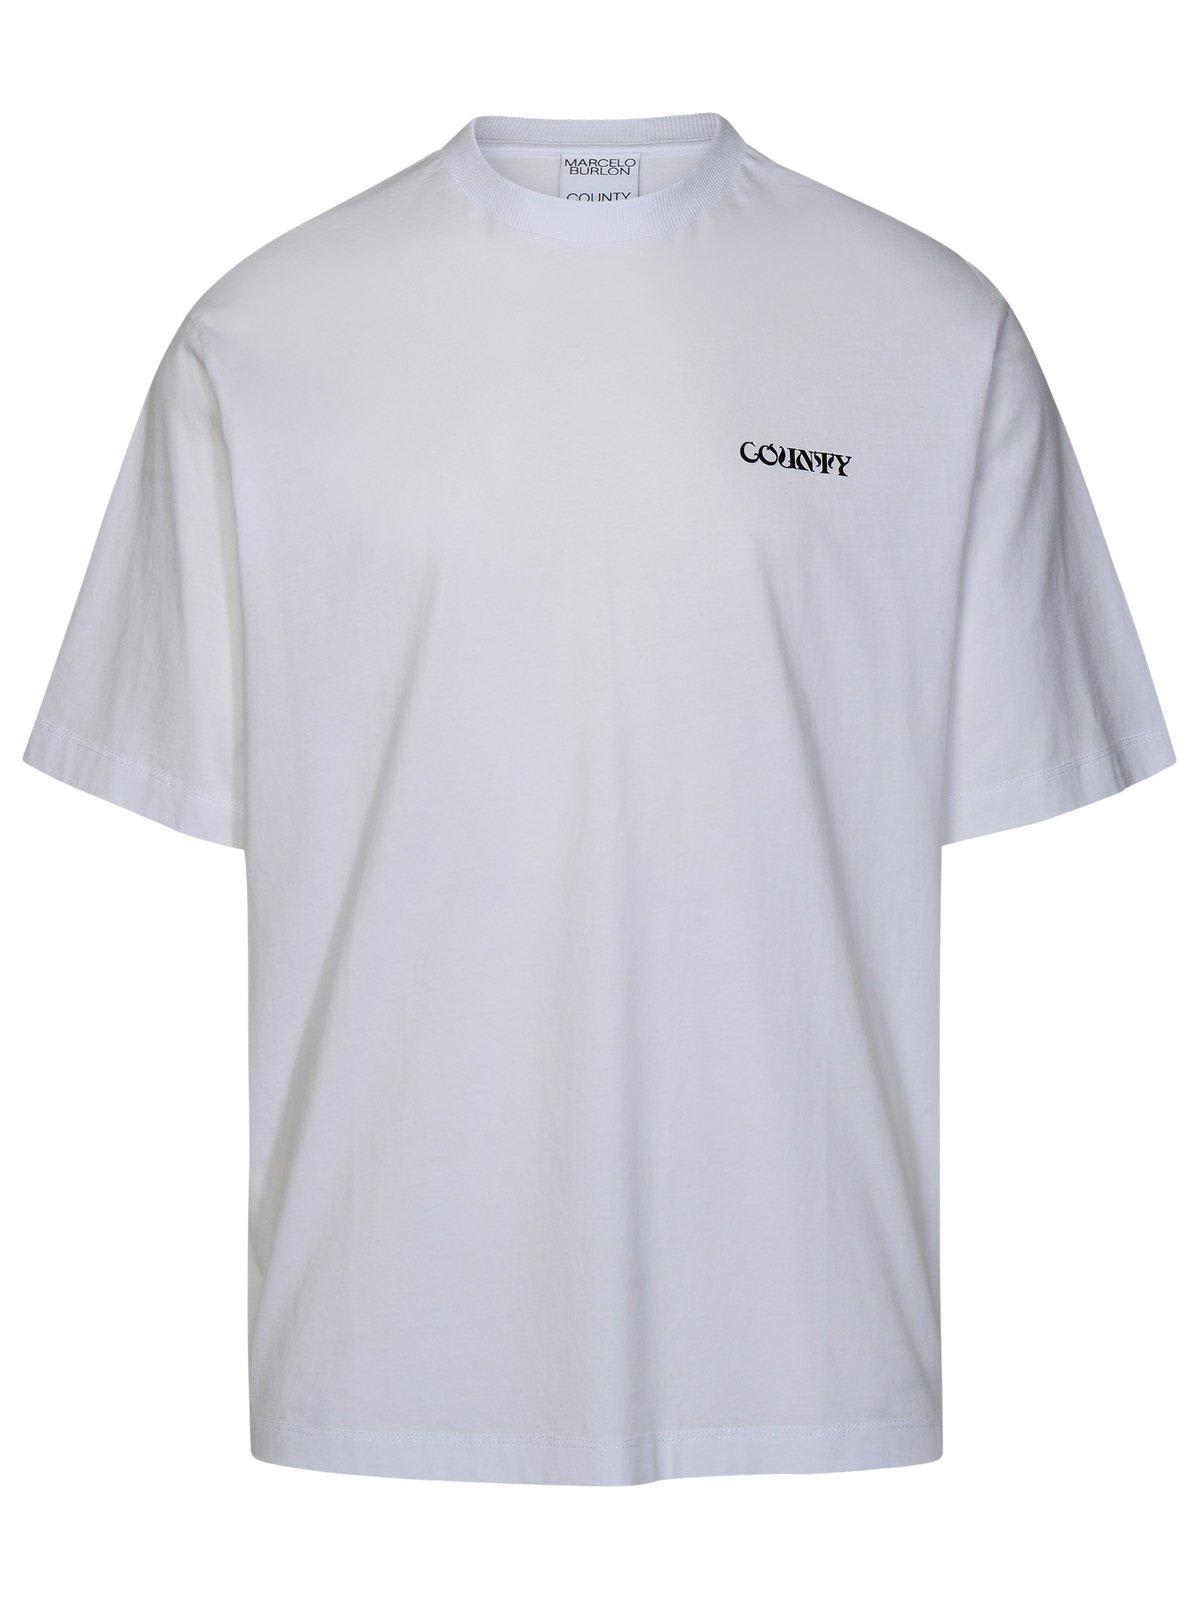 County Printed Crewneck T-shirt